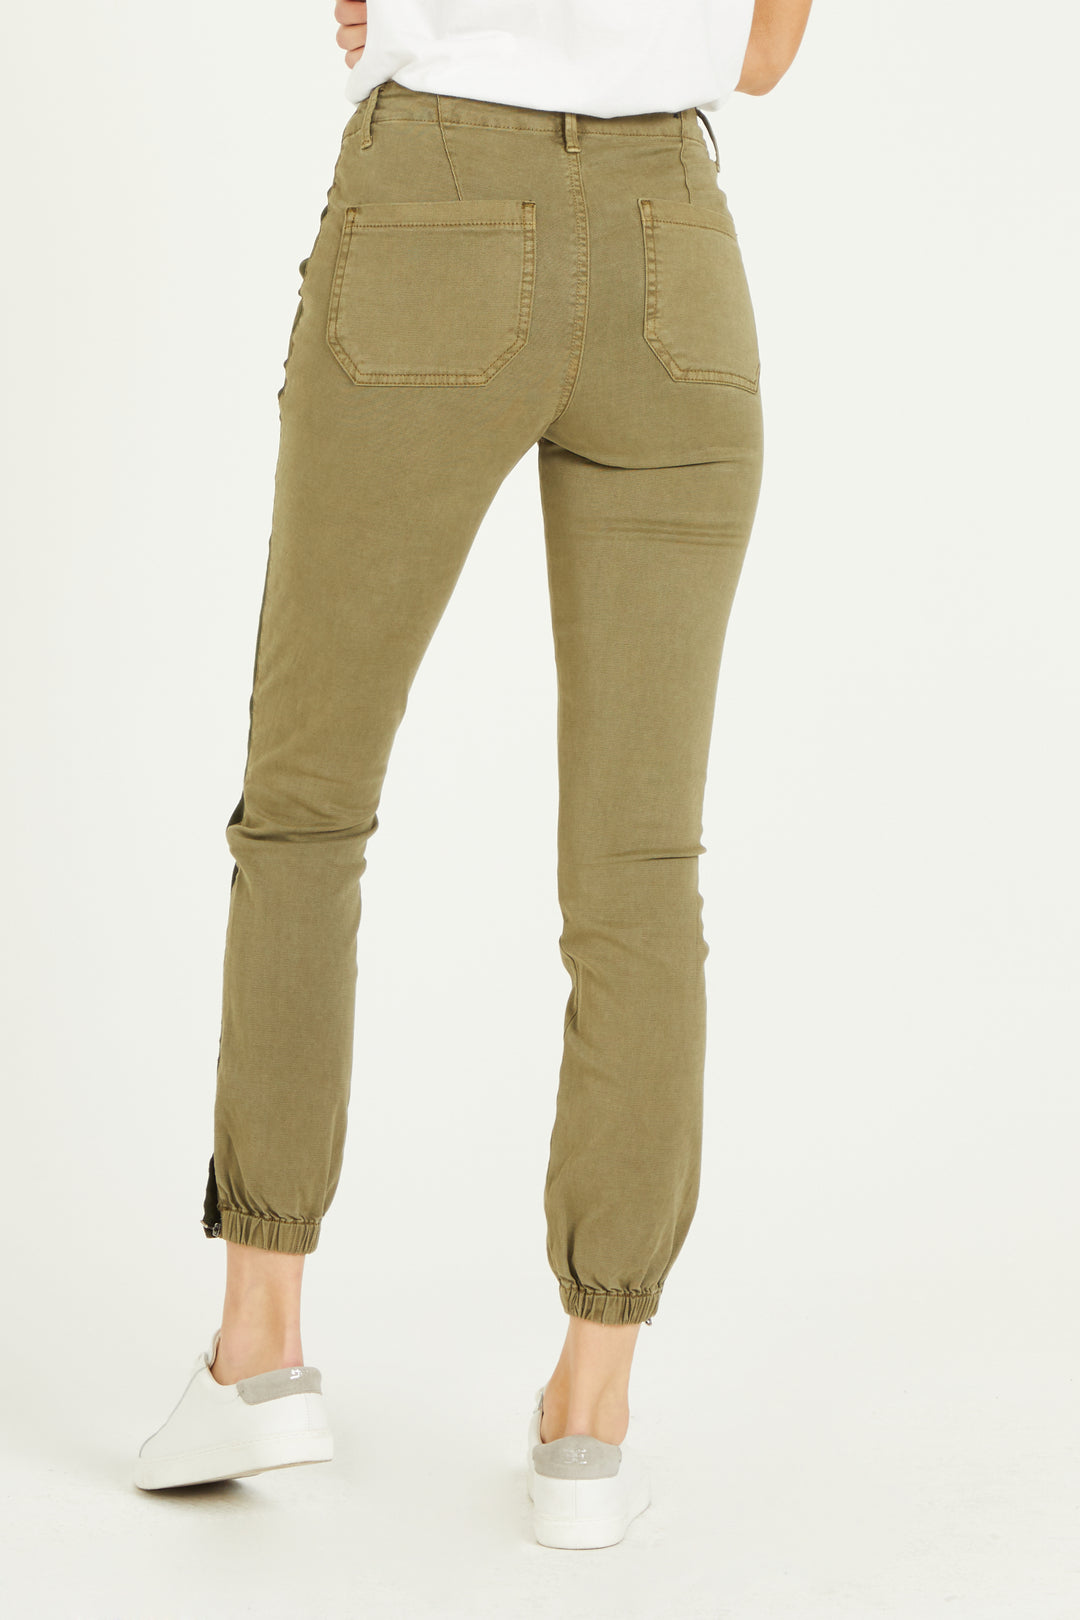 image of a female model wearing a 10" HIGH RISE JOURDAN JOGGER GREEN CYPRESS PANTS